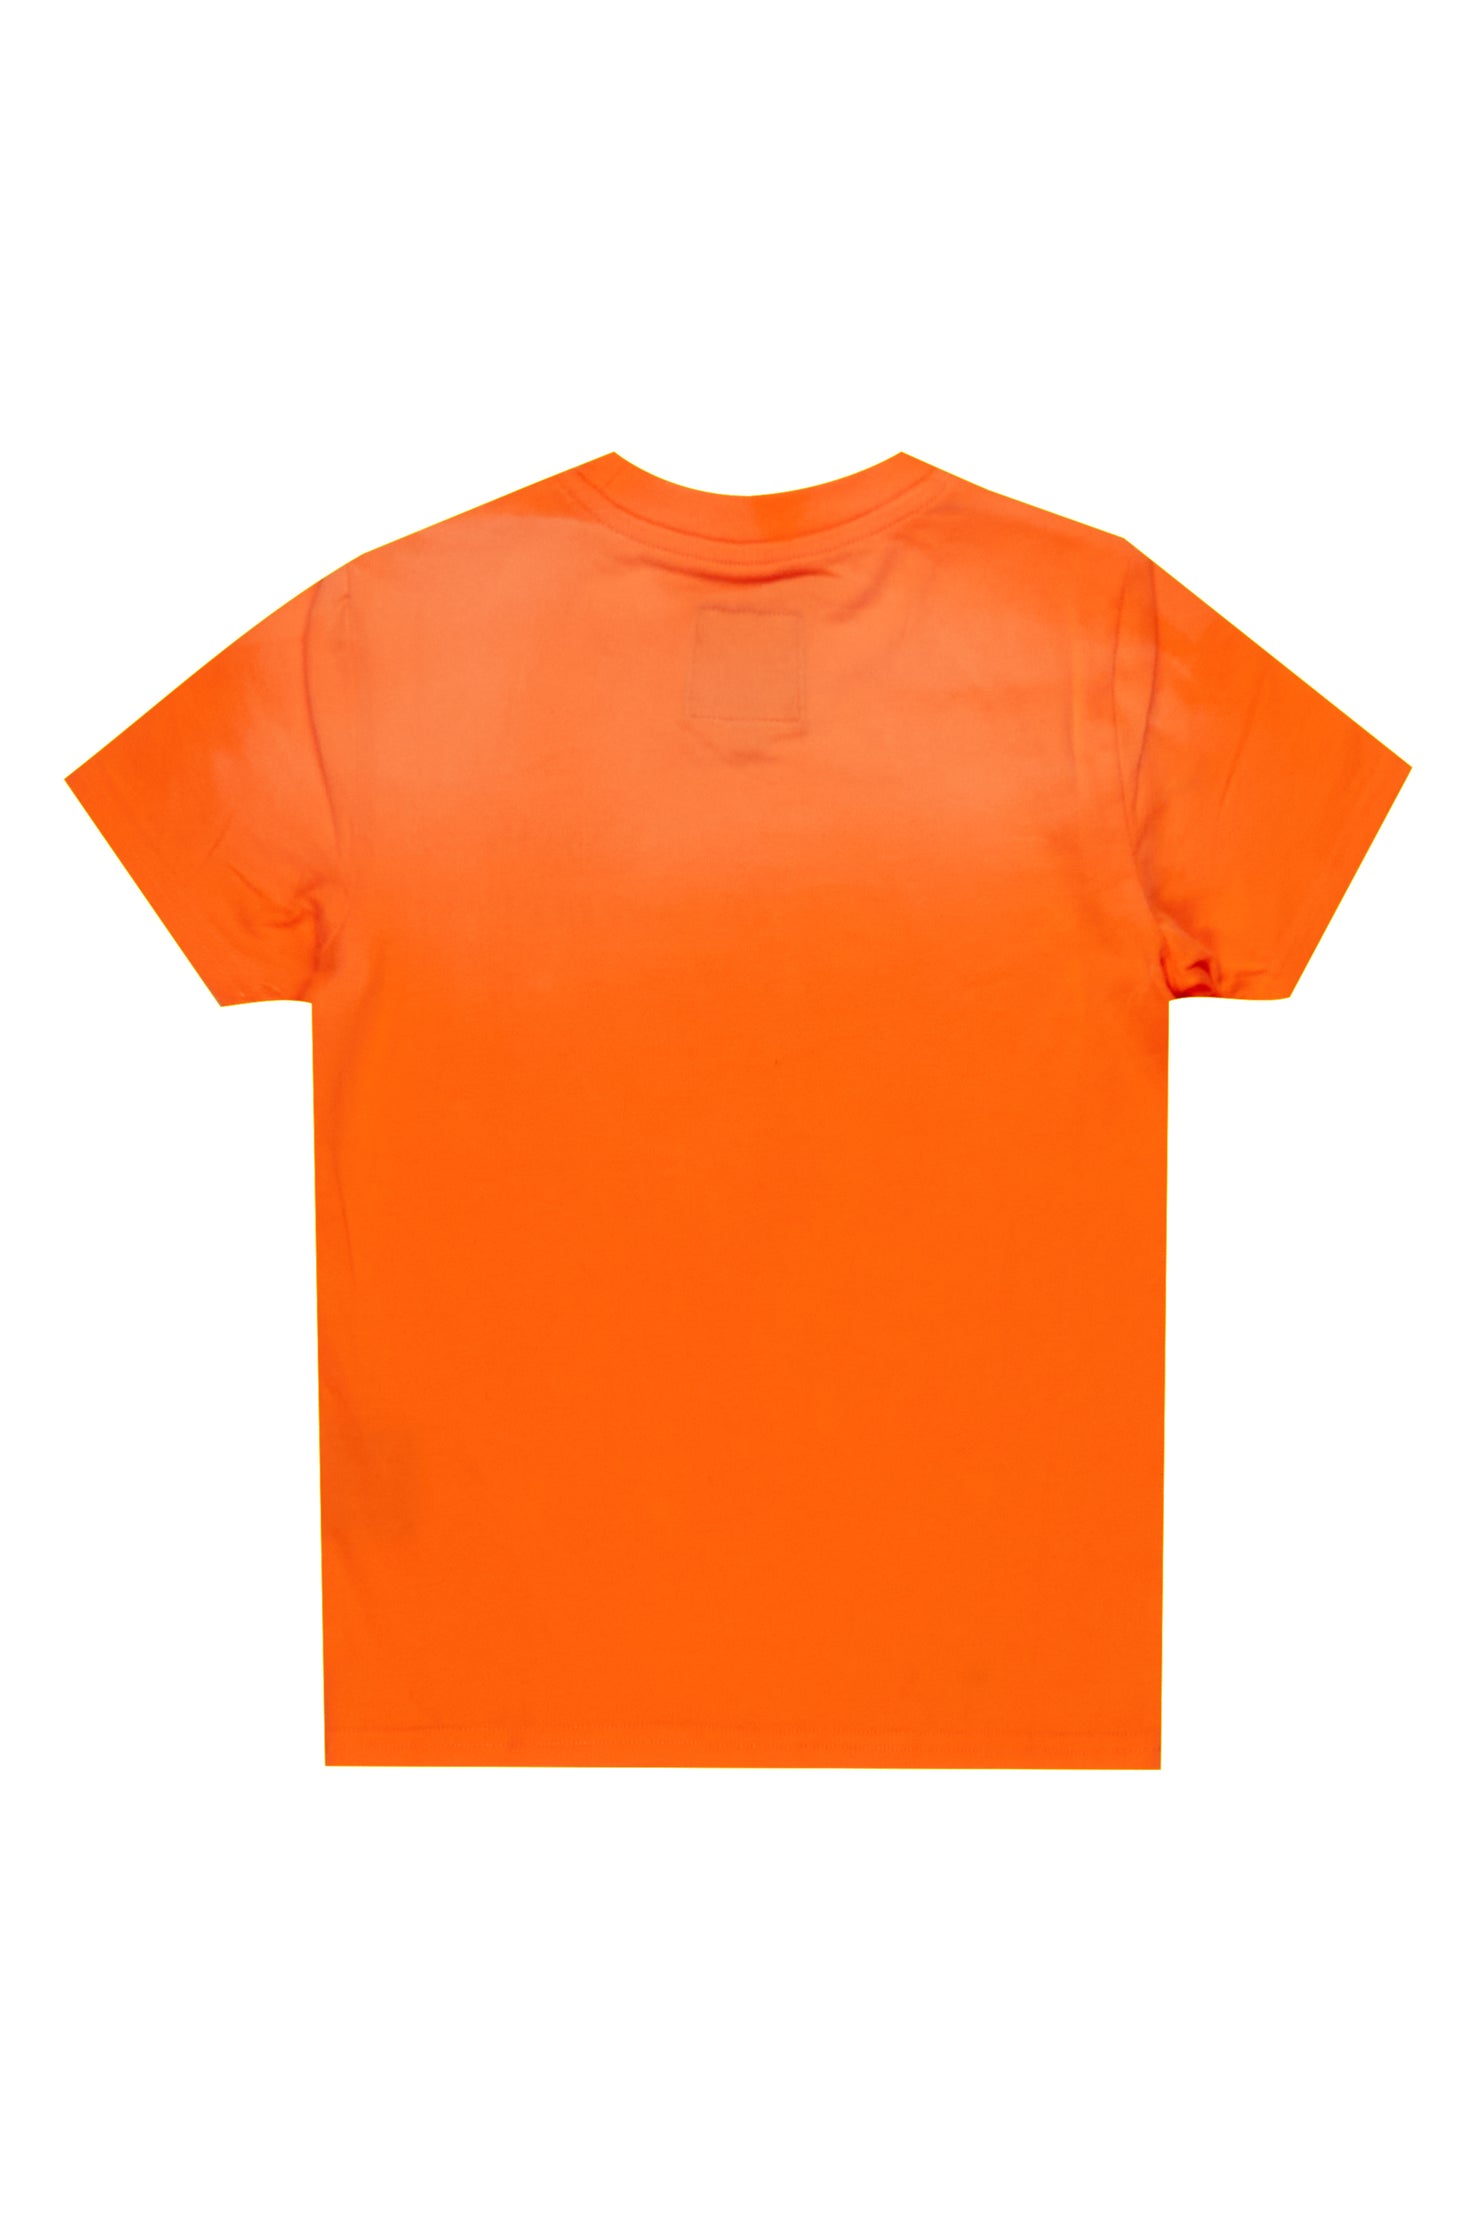 T-shirt for boys 4F orange HJL20 JTSM003A 70S